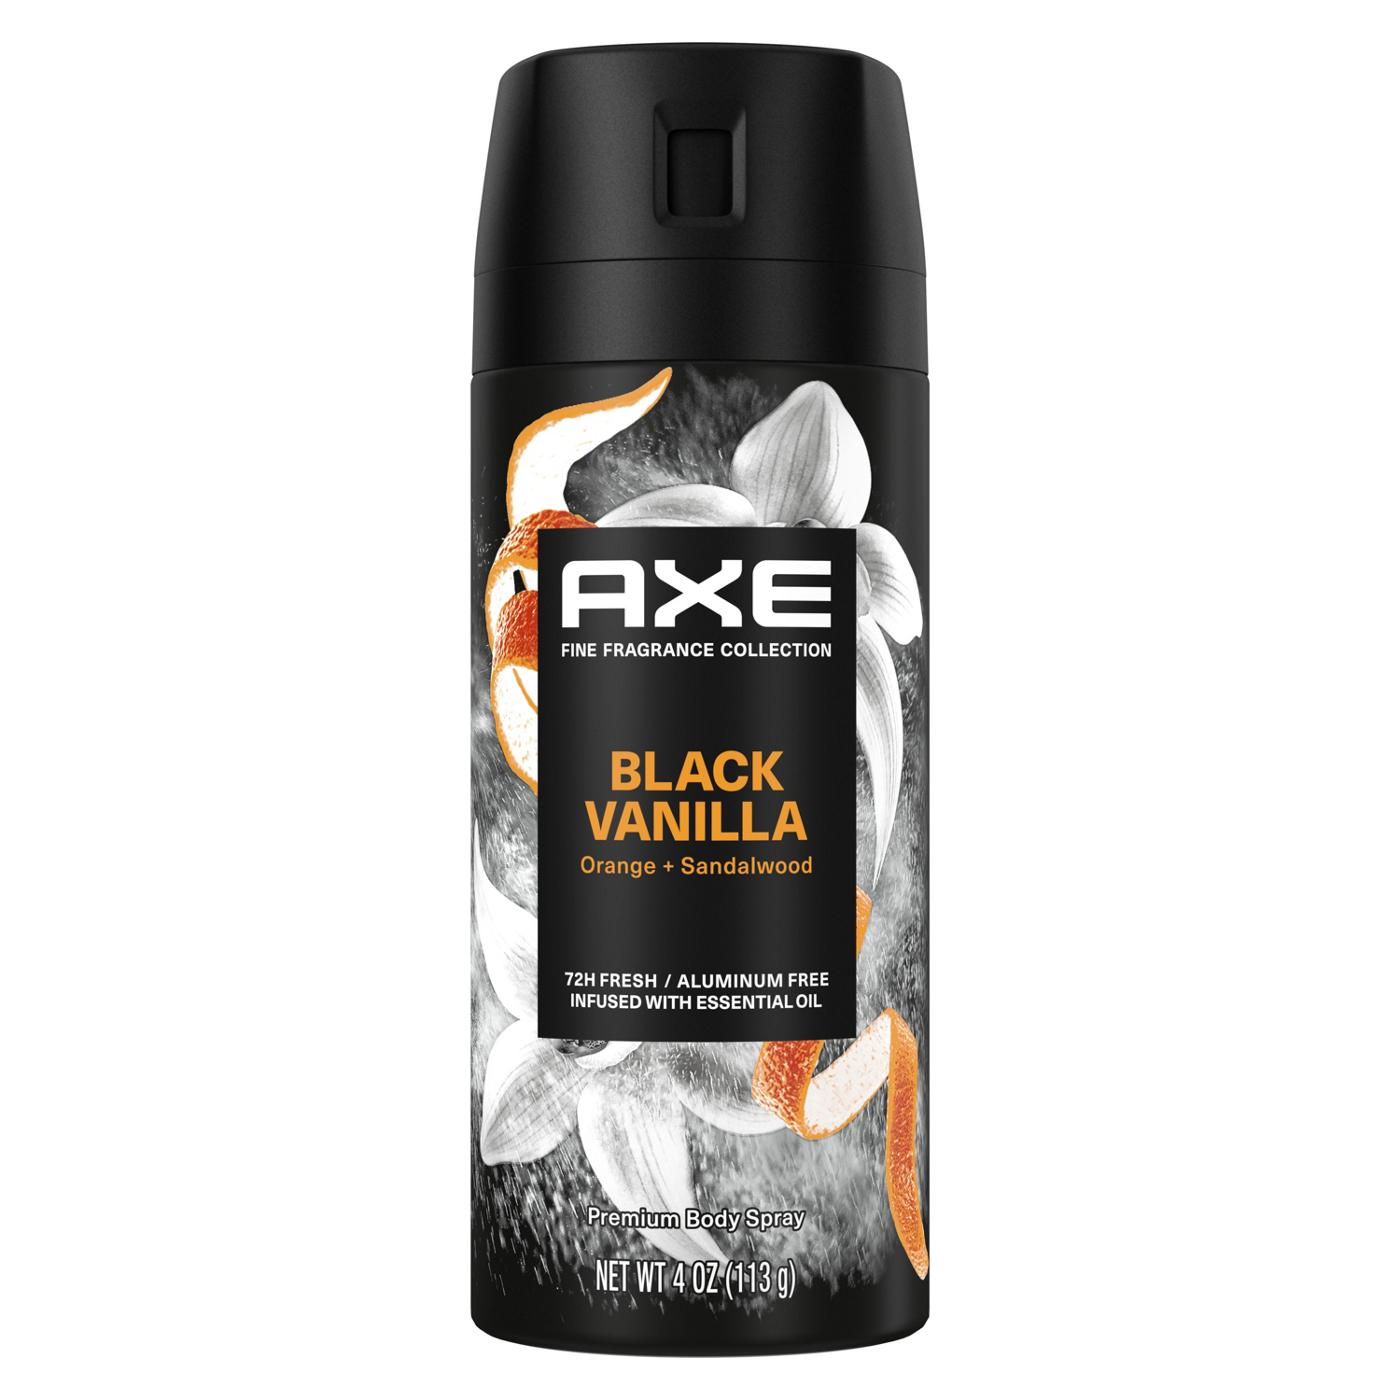 AXE Fine Fragrance Collection Premium Body Spray - Black Vanilla; image 1 of 4